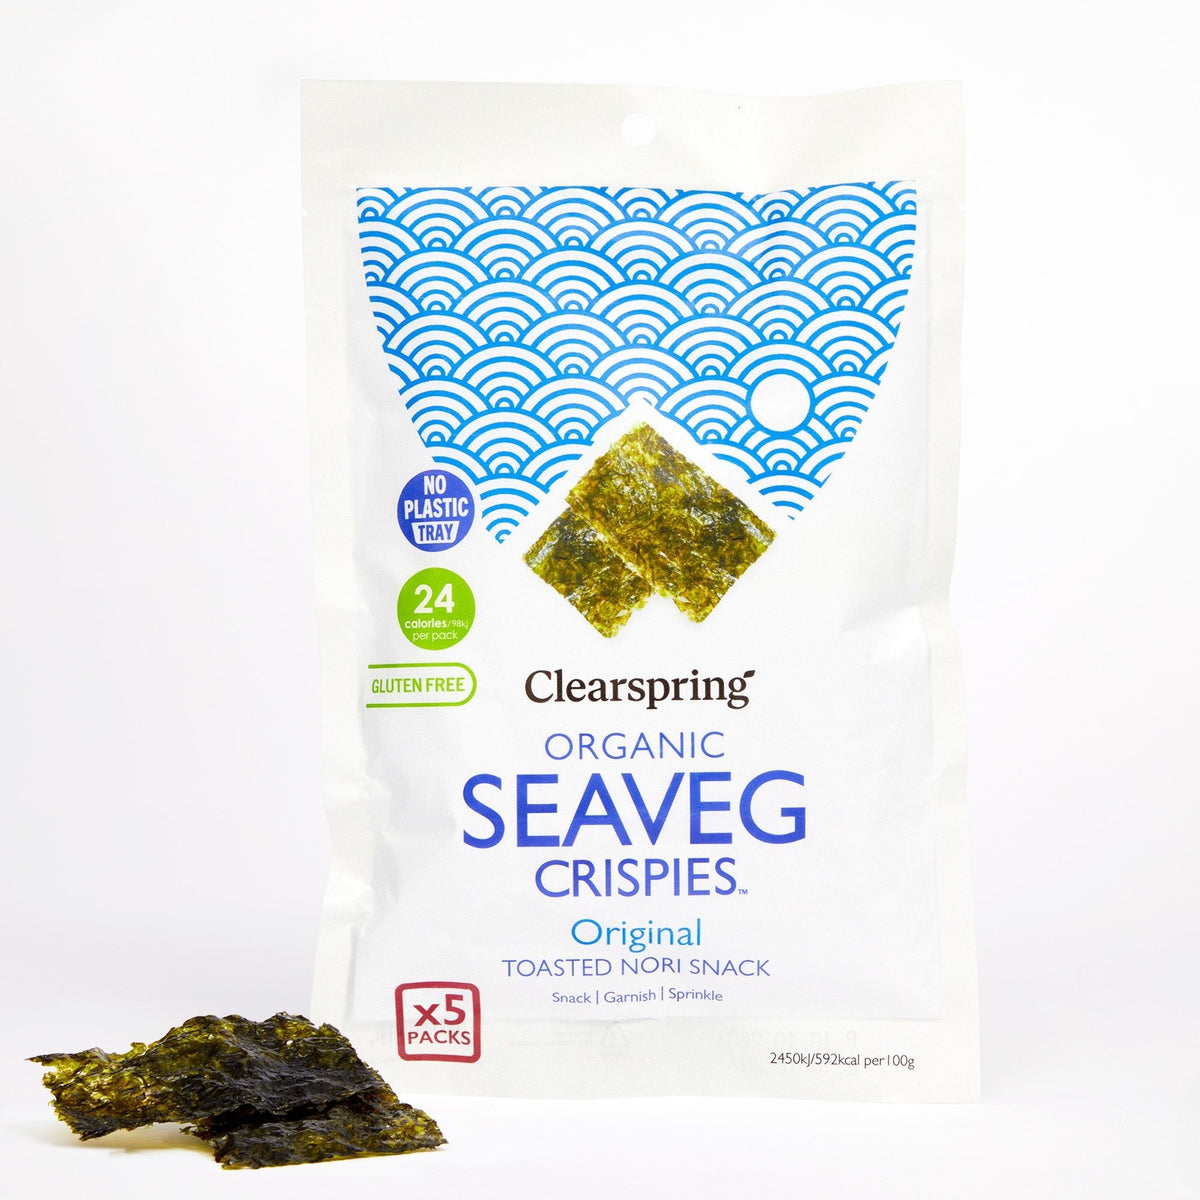 Organic Seaveg Crispies Multipack - Original (Crispy Seaweed Thins) (6 Pack)